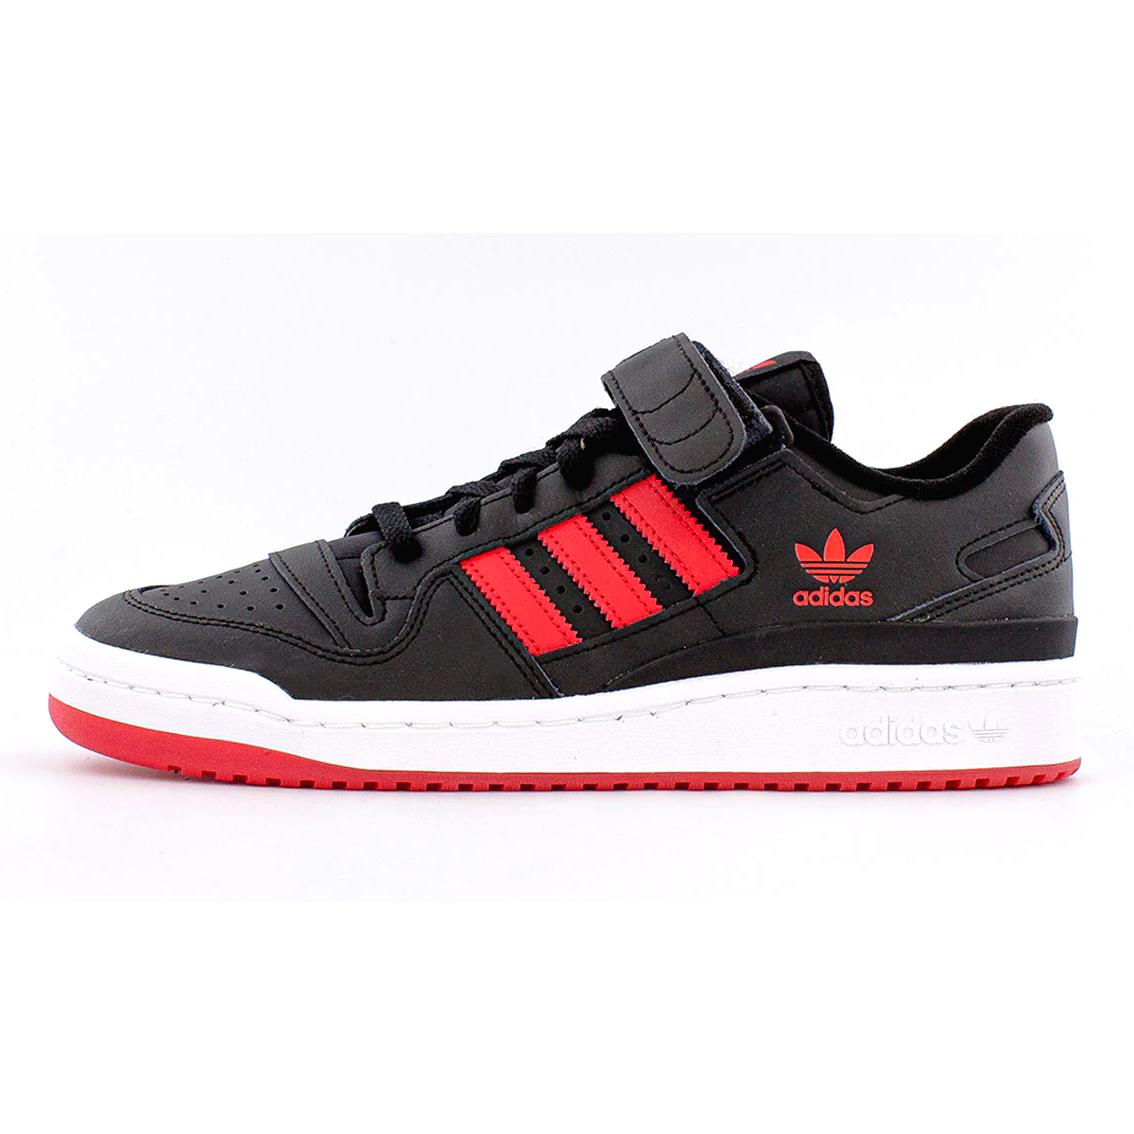 Mens Adidas Forum Low Originals Black Red Casual Basketball Athletic Shoe - Black